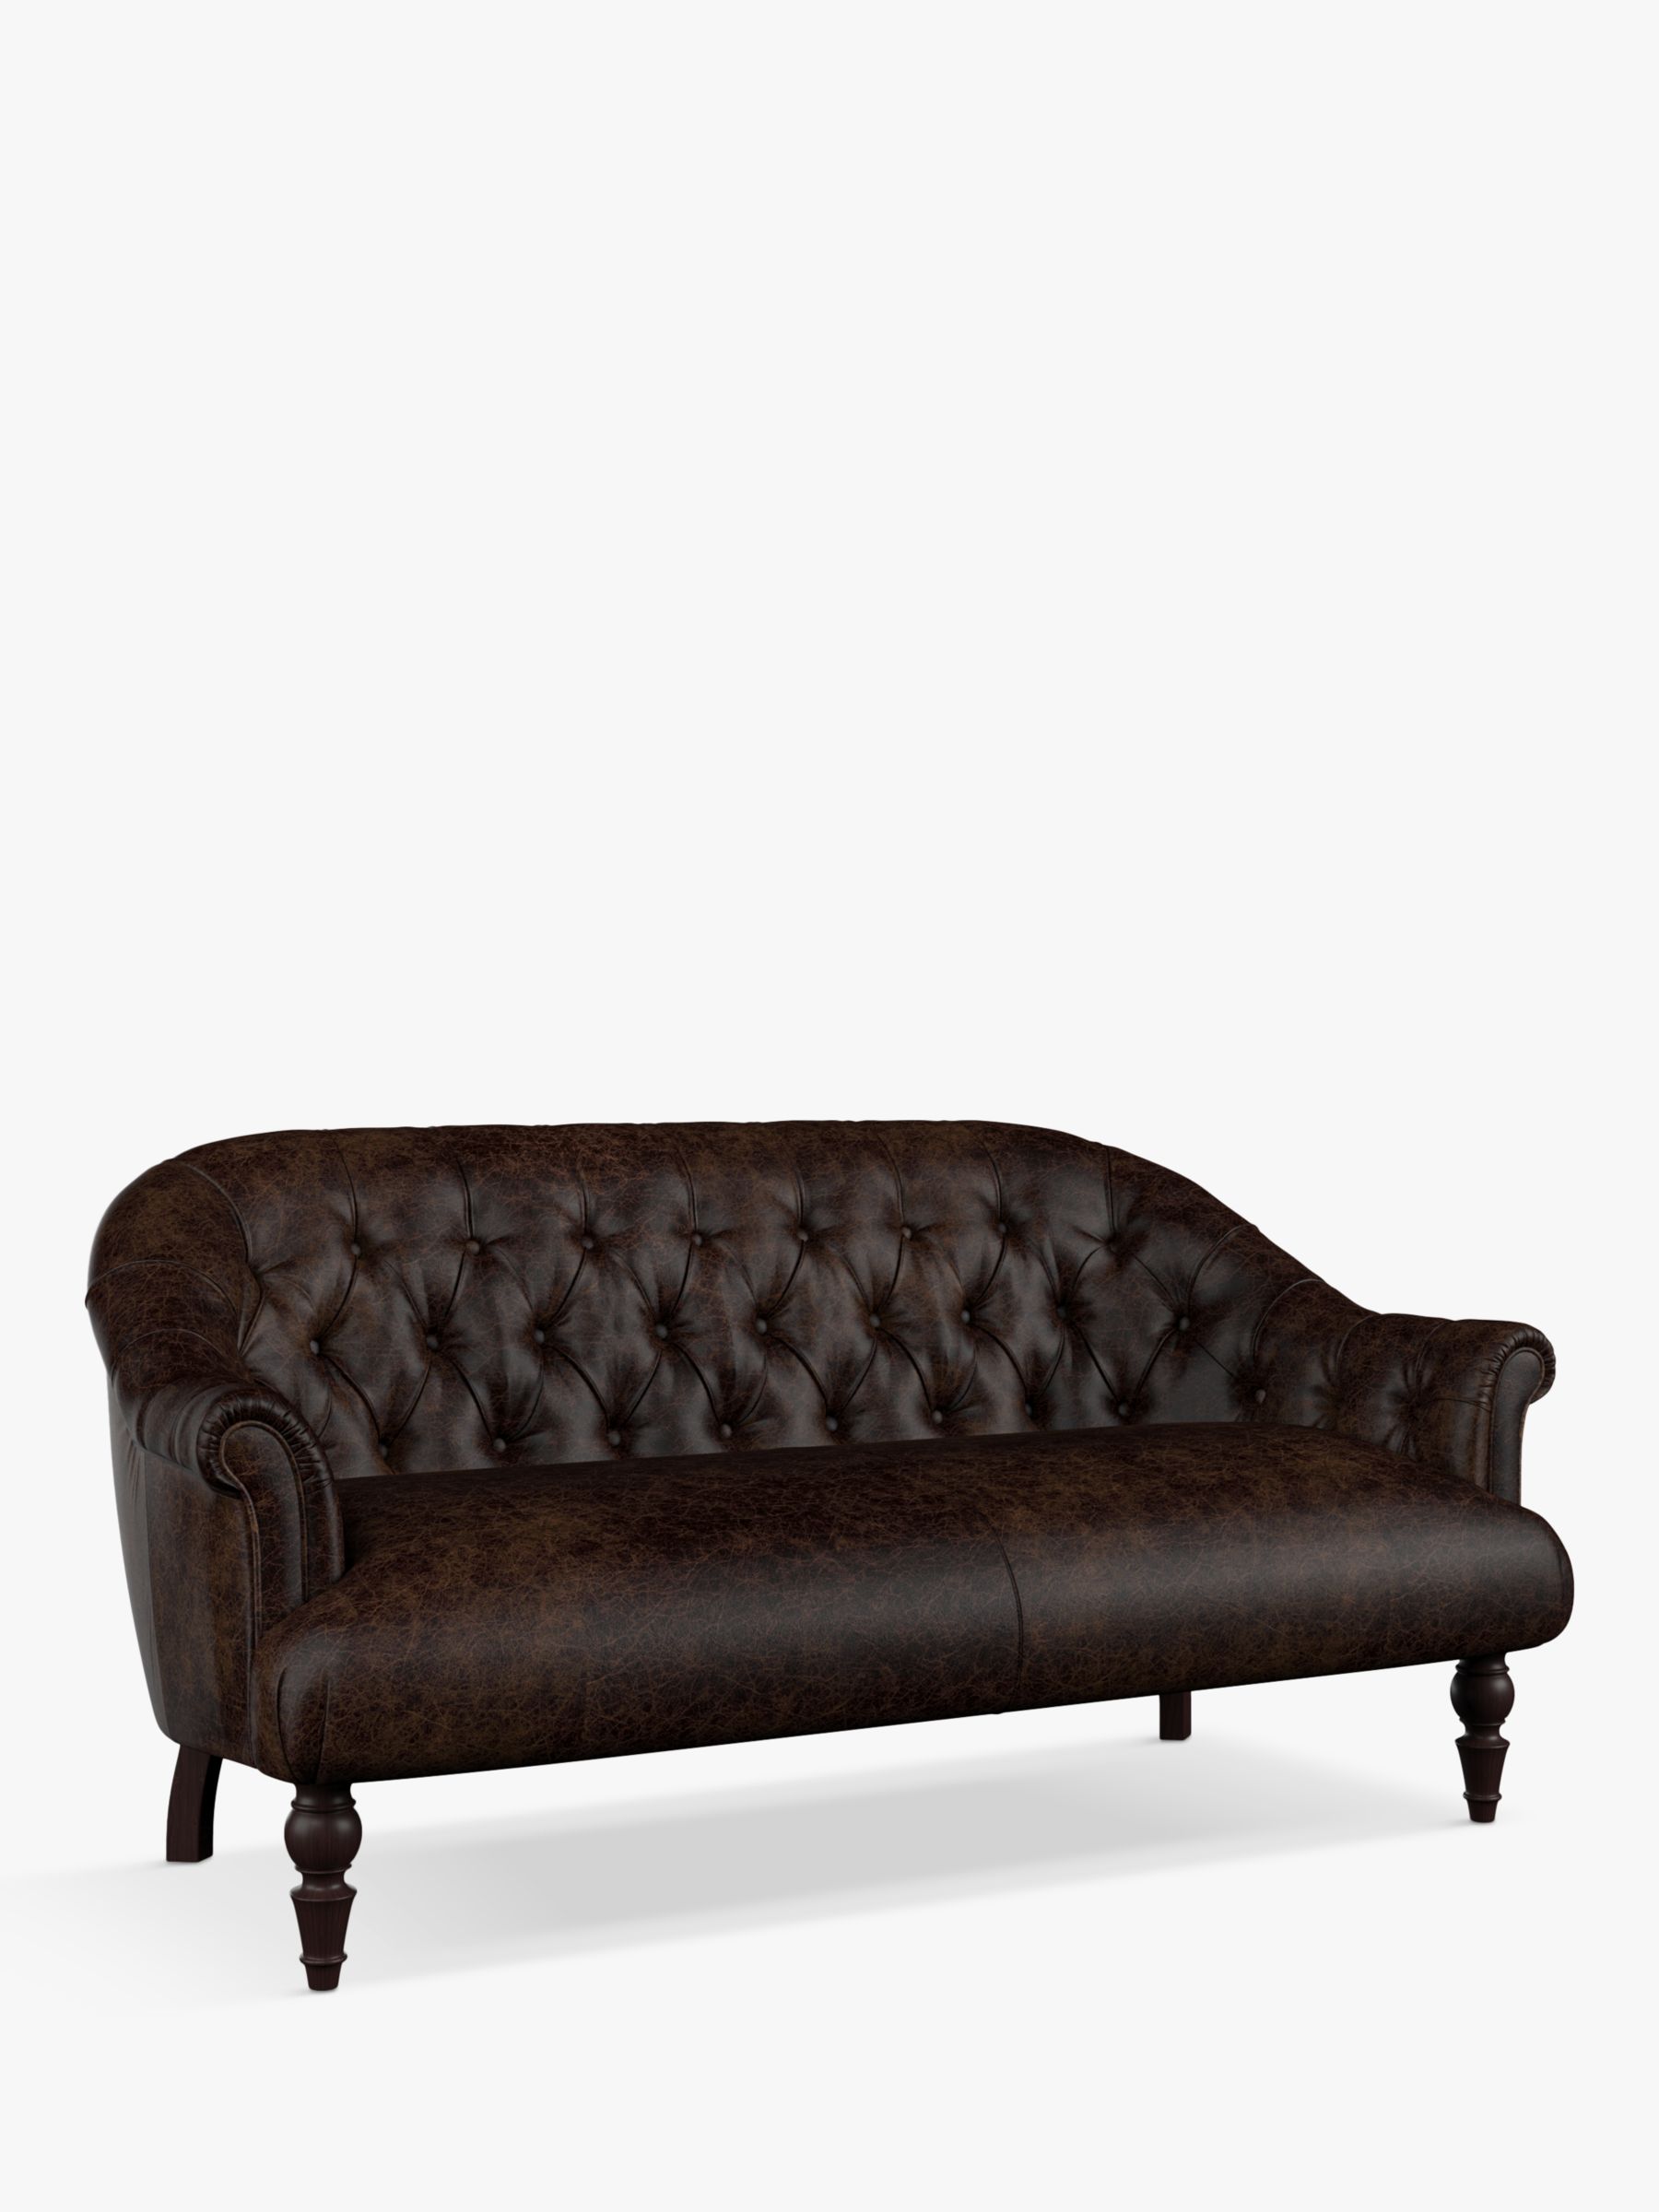 Tetrad Aughton Petite 2 Seater Leather Sofa